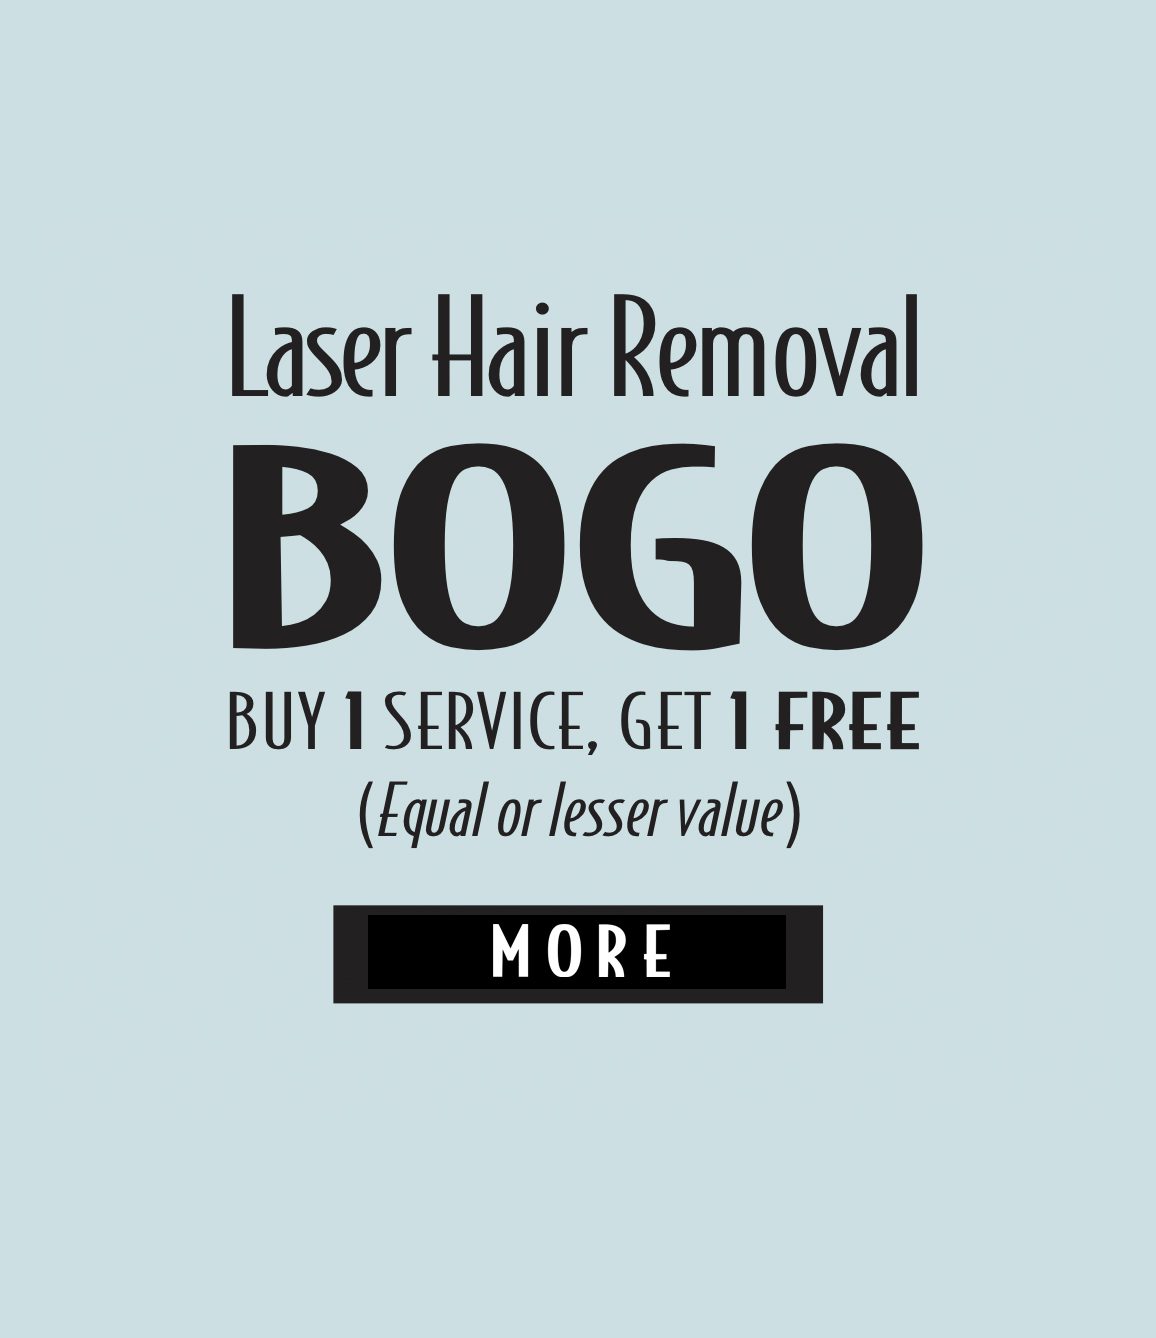 Laser Hair Removal BOGO